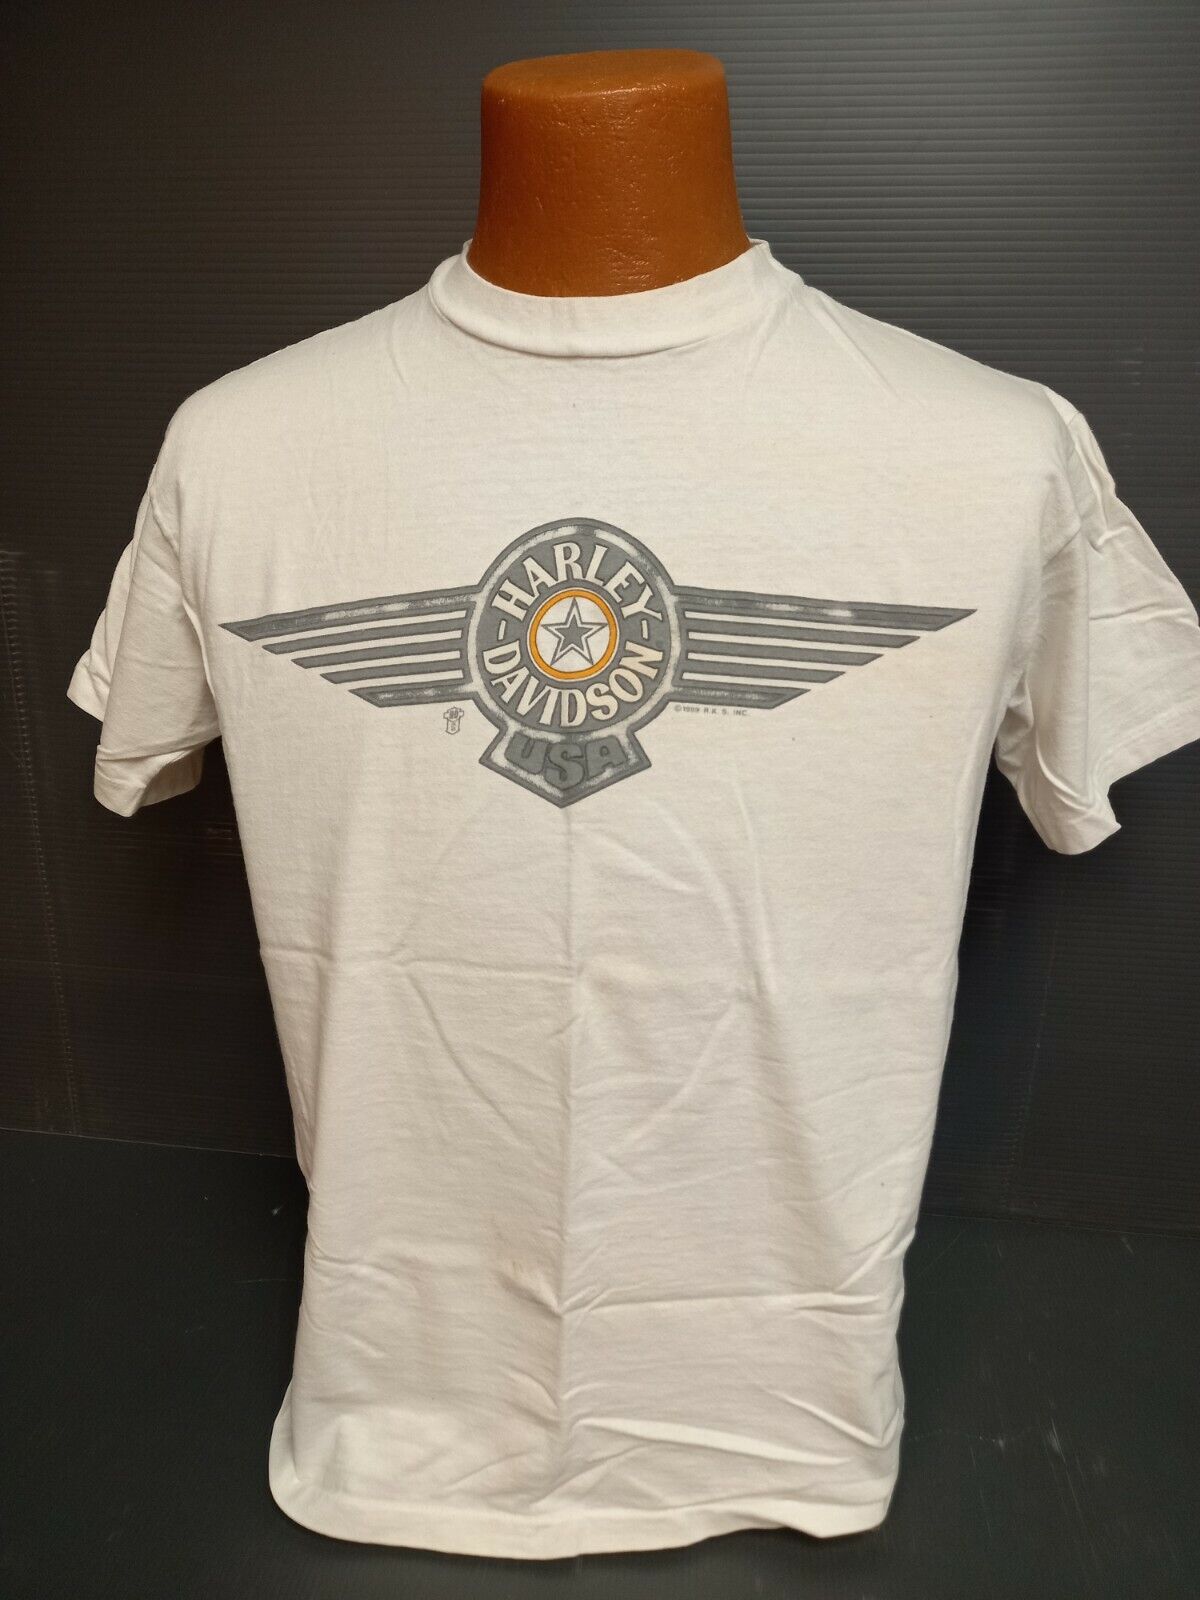 Rare Vintage Harley Davidson Large T-Shirt 1989 Harbor City L.A. California